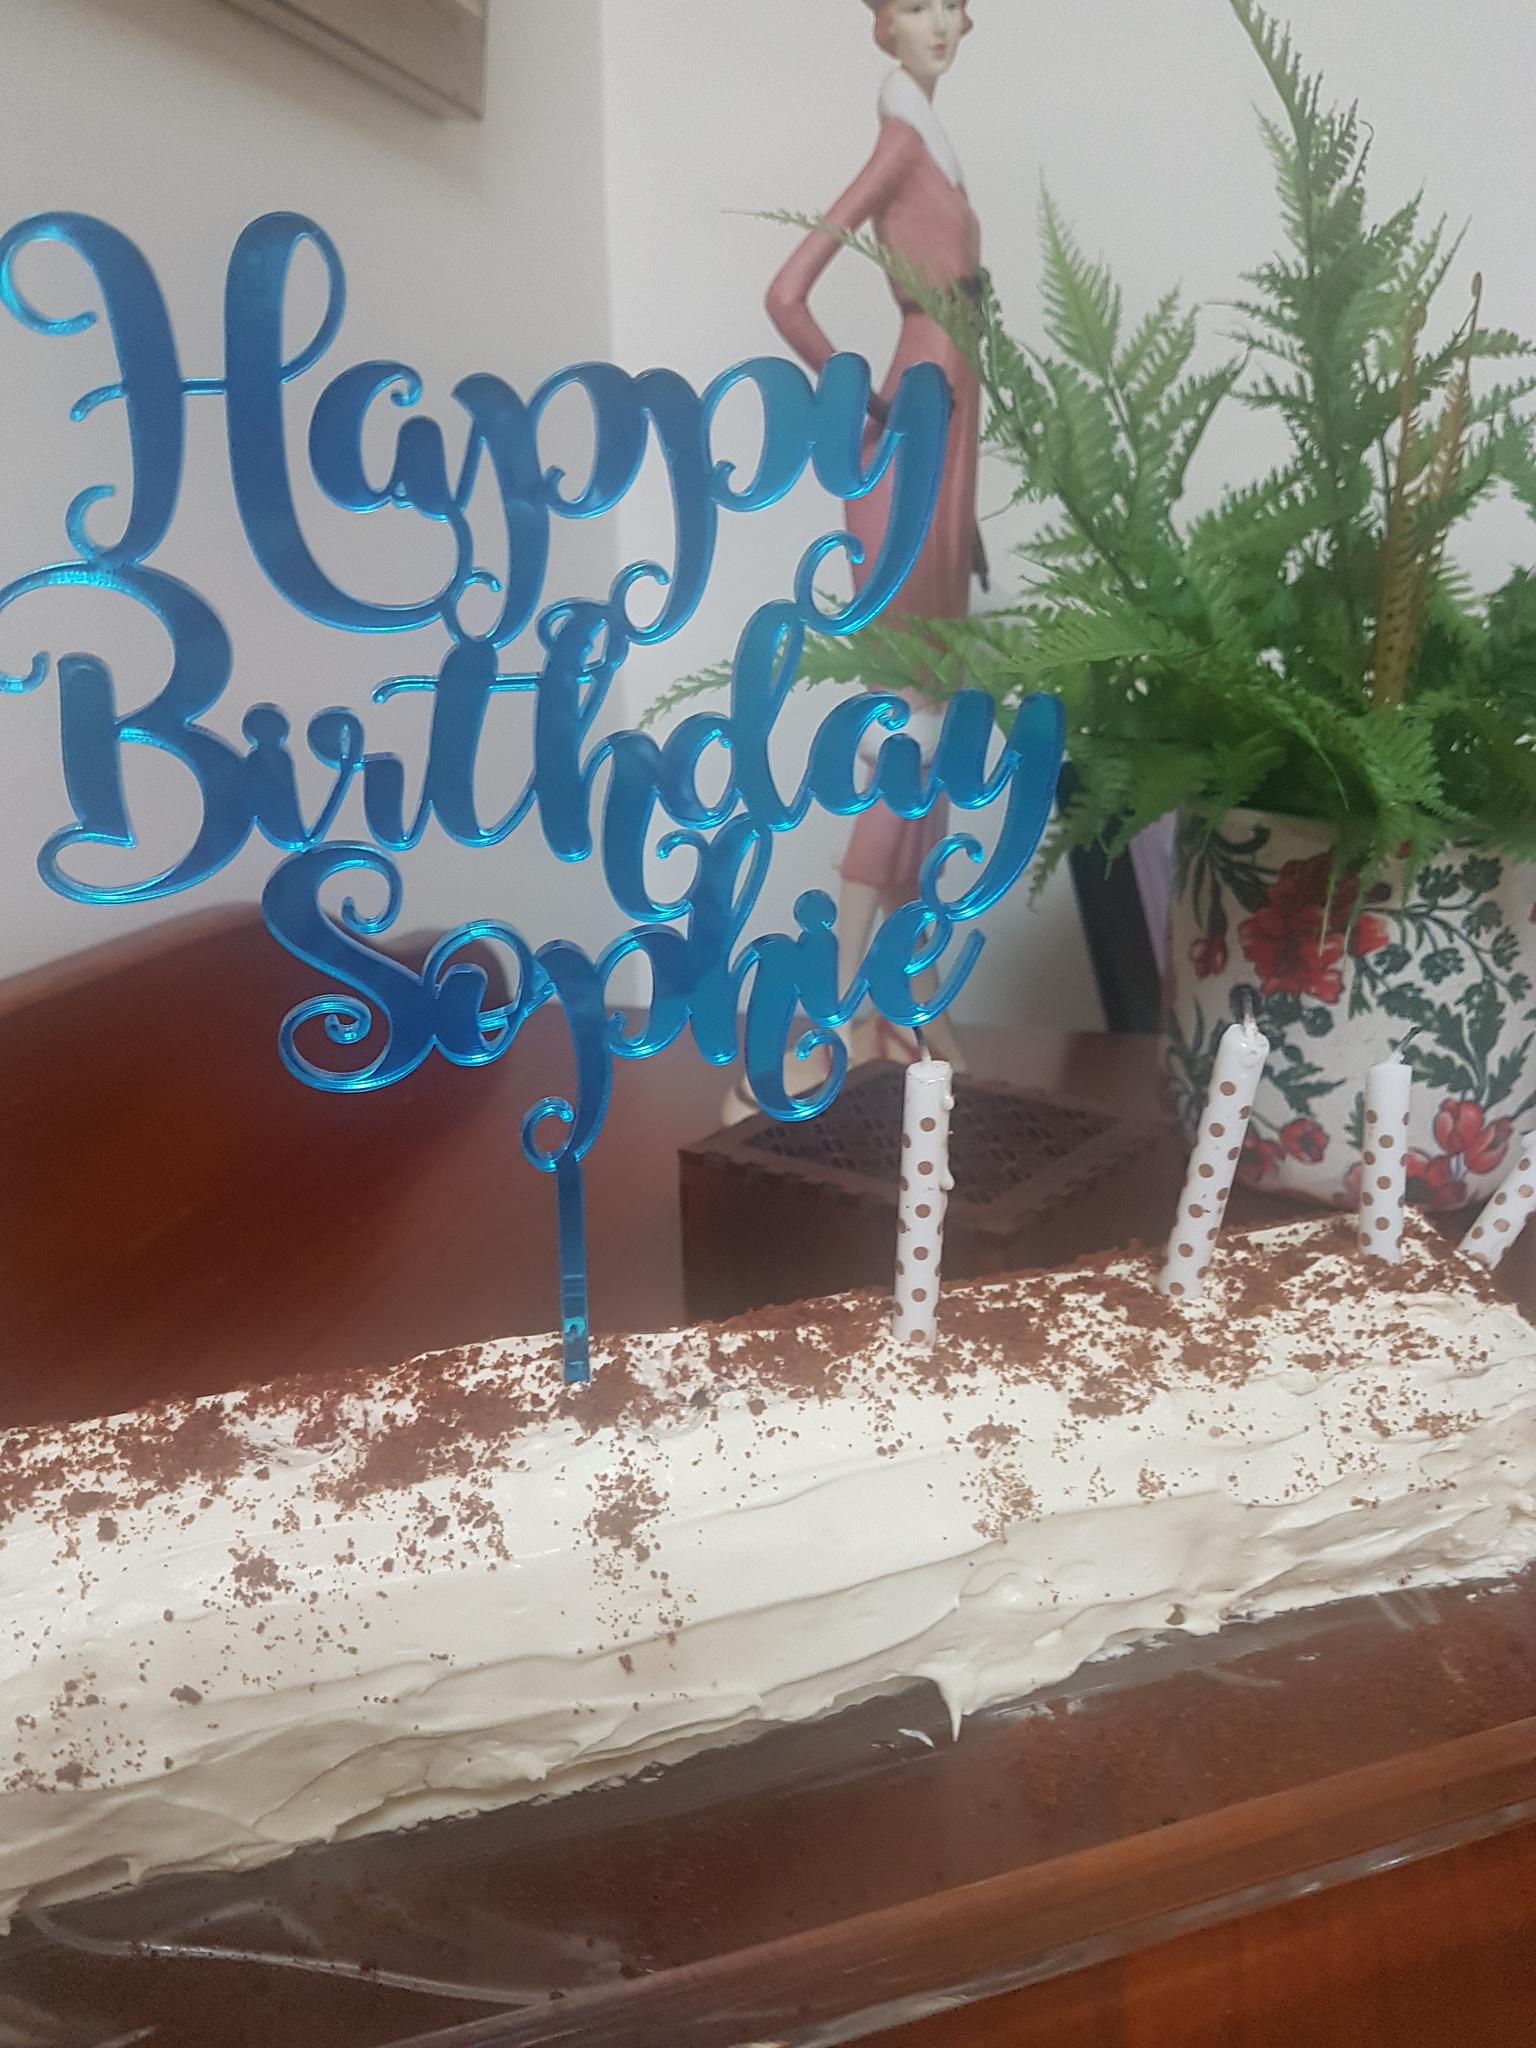 Happy birthday sophie cake topper